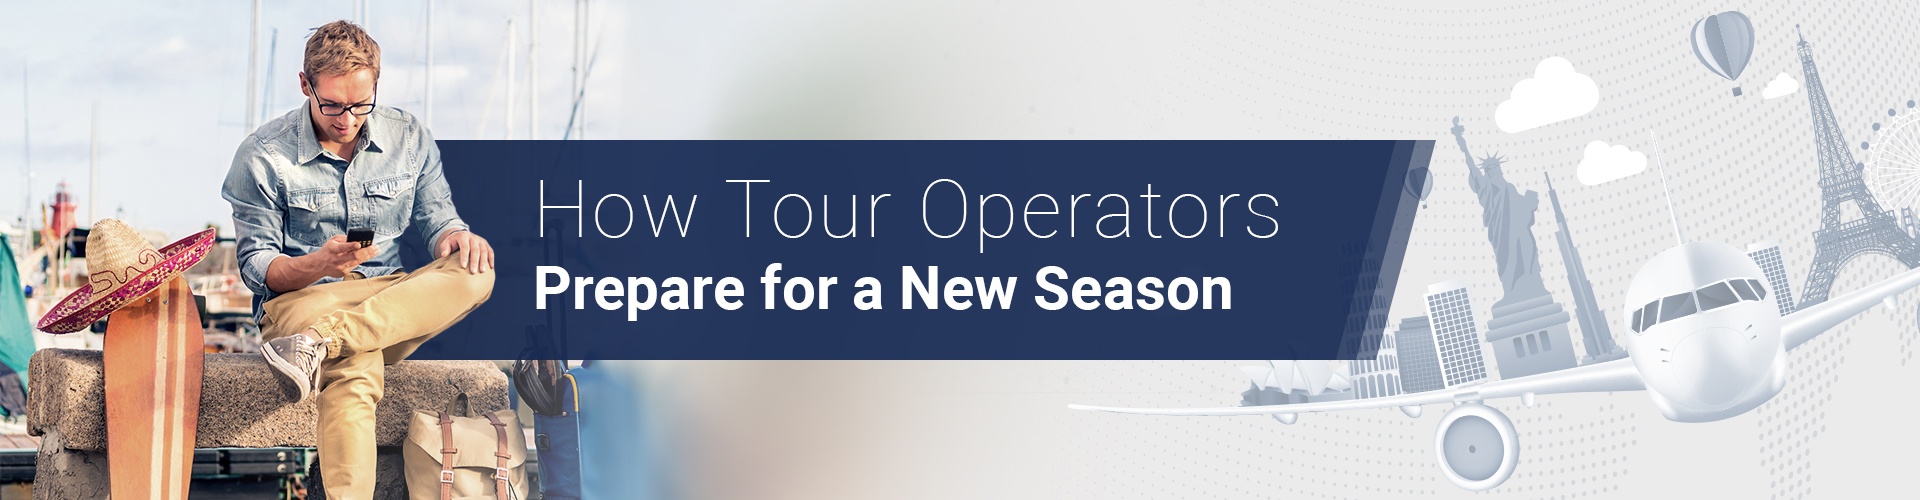 How our Operators prepare for a New Season